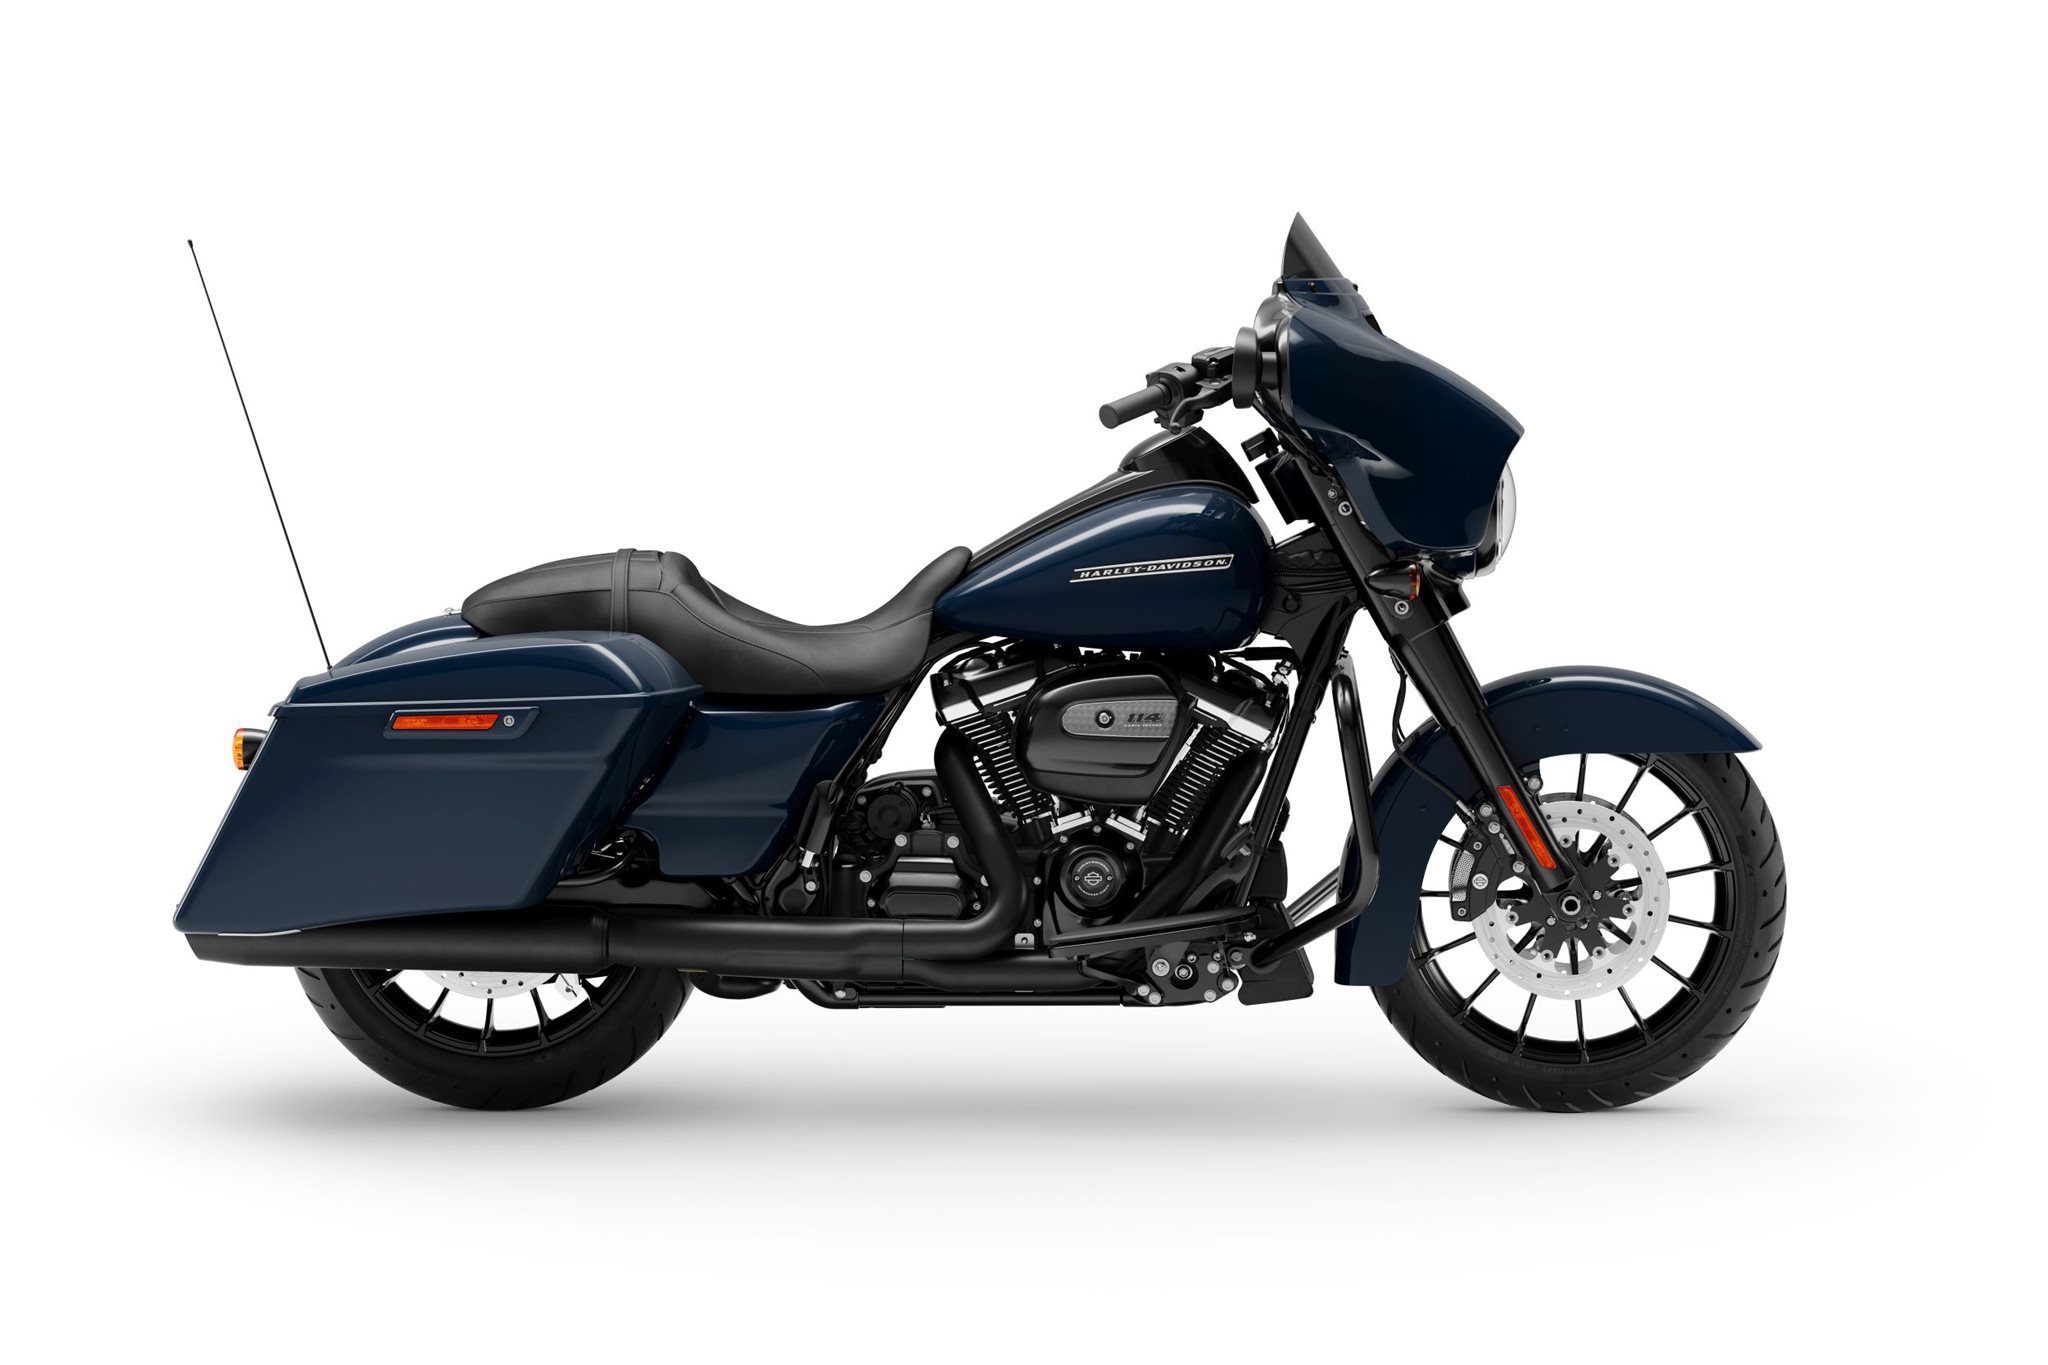 Motorrad Vergleich Harley Davidson Touring Street Glide Special Flhxs 2020 Vs Harley Davidson Cvo Road Glide Ultra Fltruse 2015